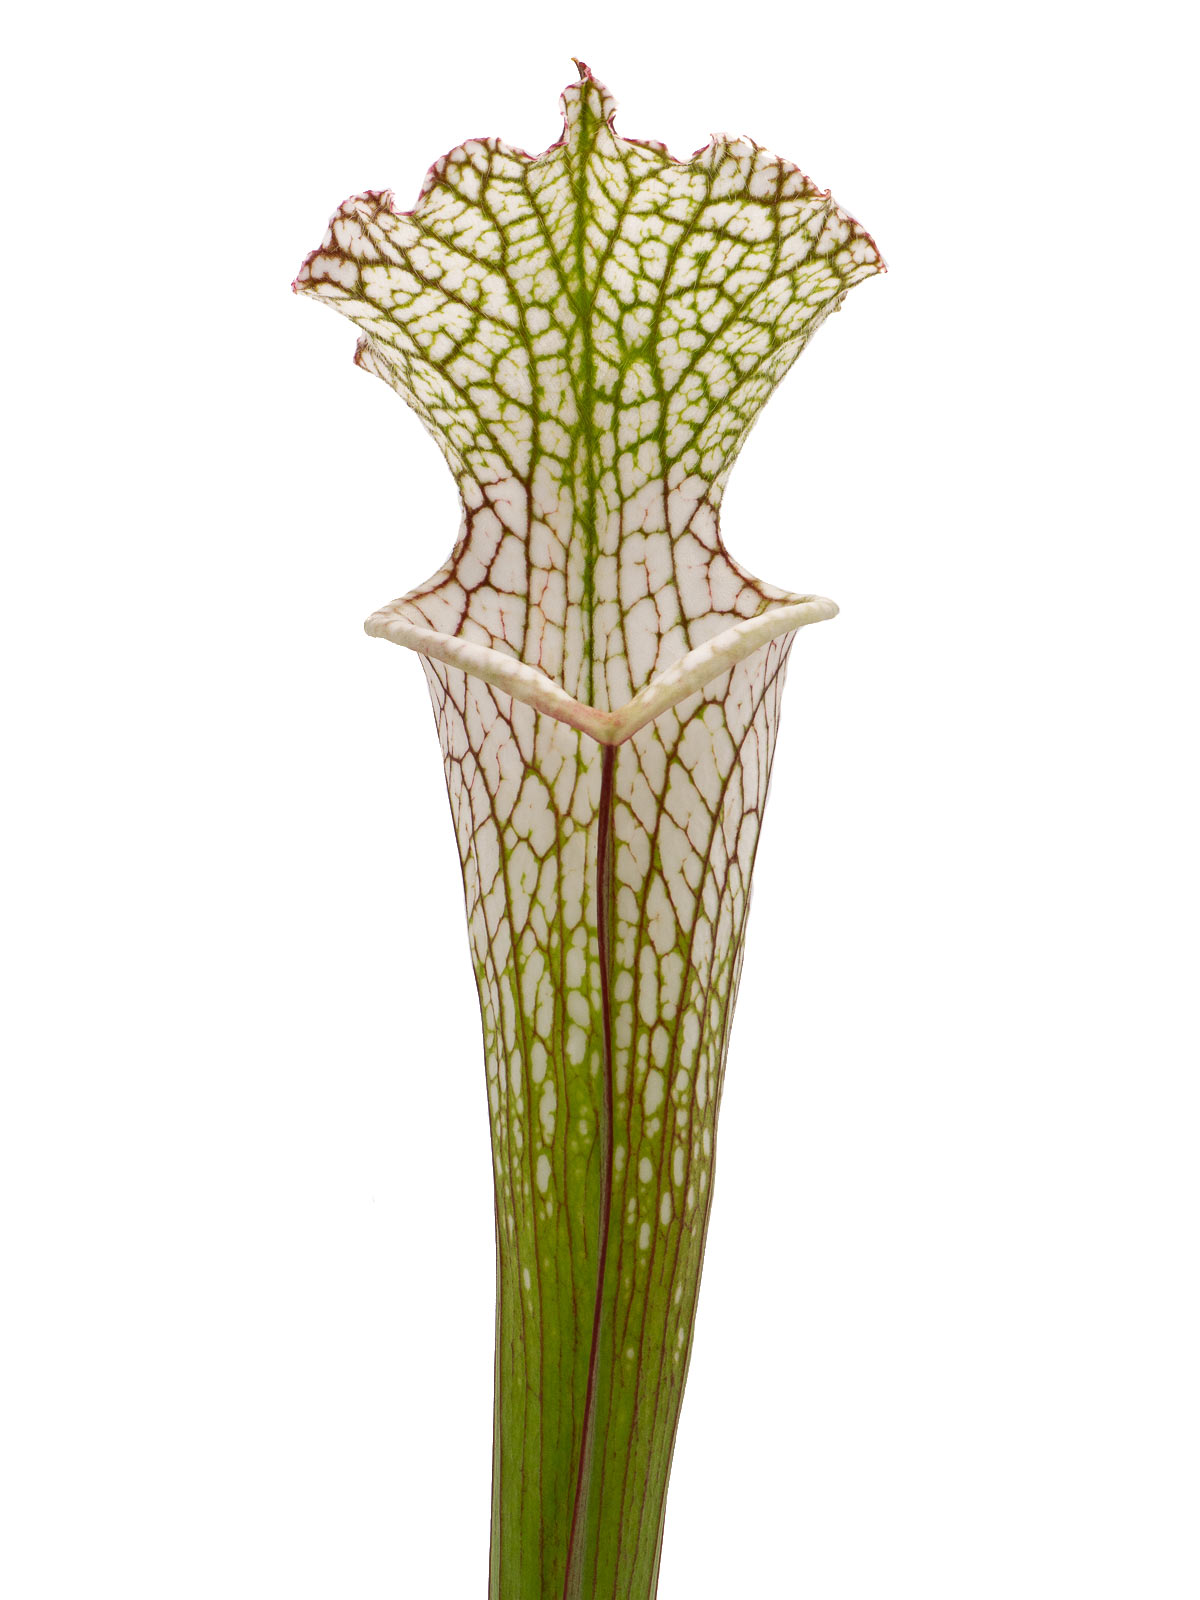 Sarracenia leucophylla - Dr. Eberhad König, Clone A